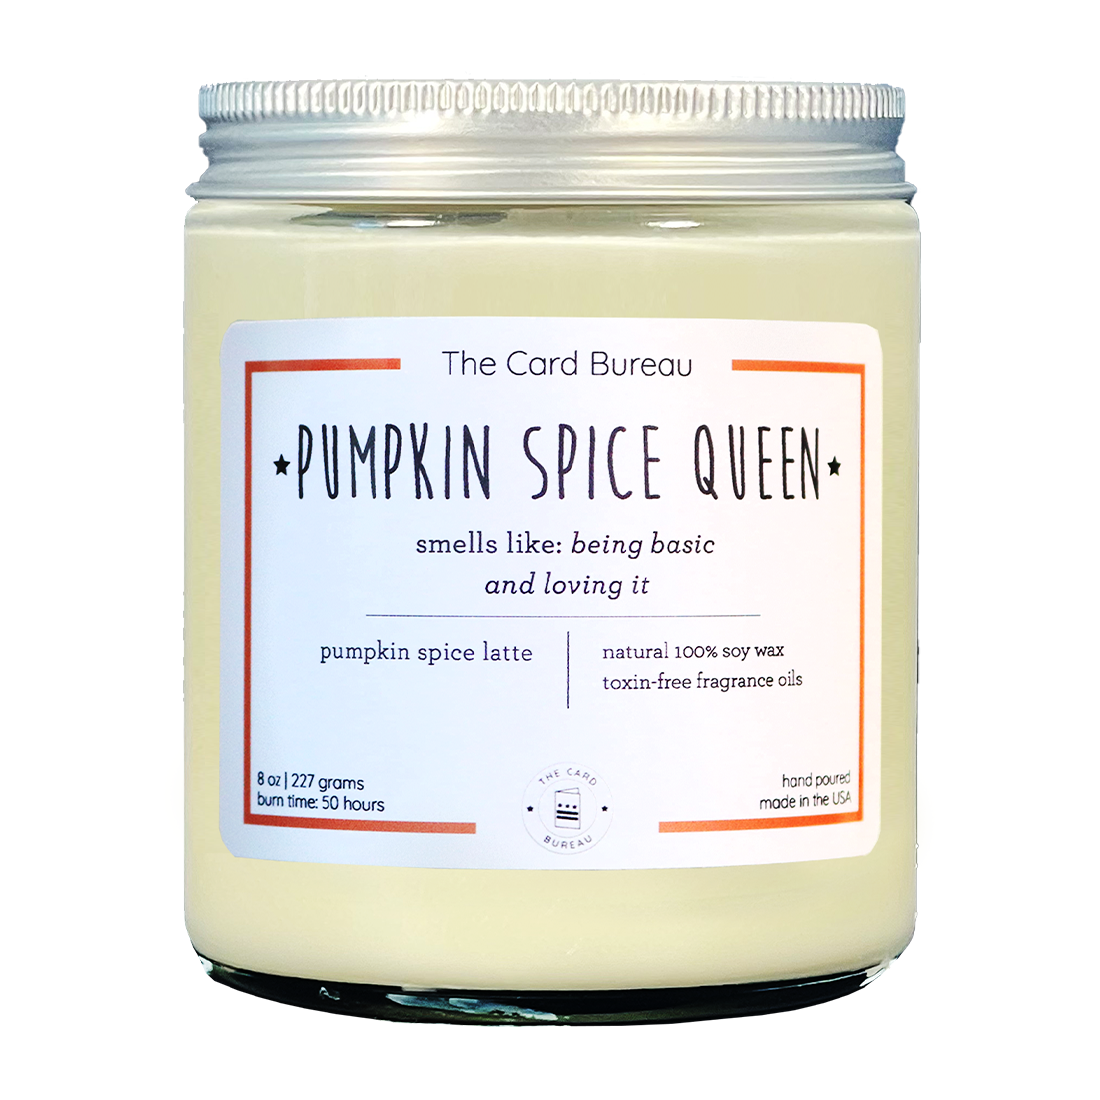 8 oz Pumpkin Spice Queen Candle